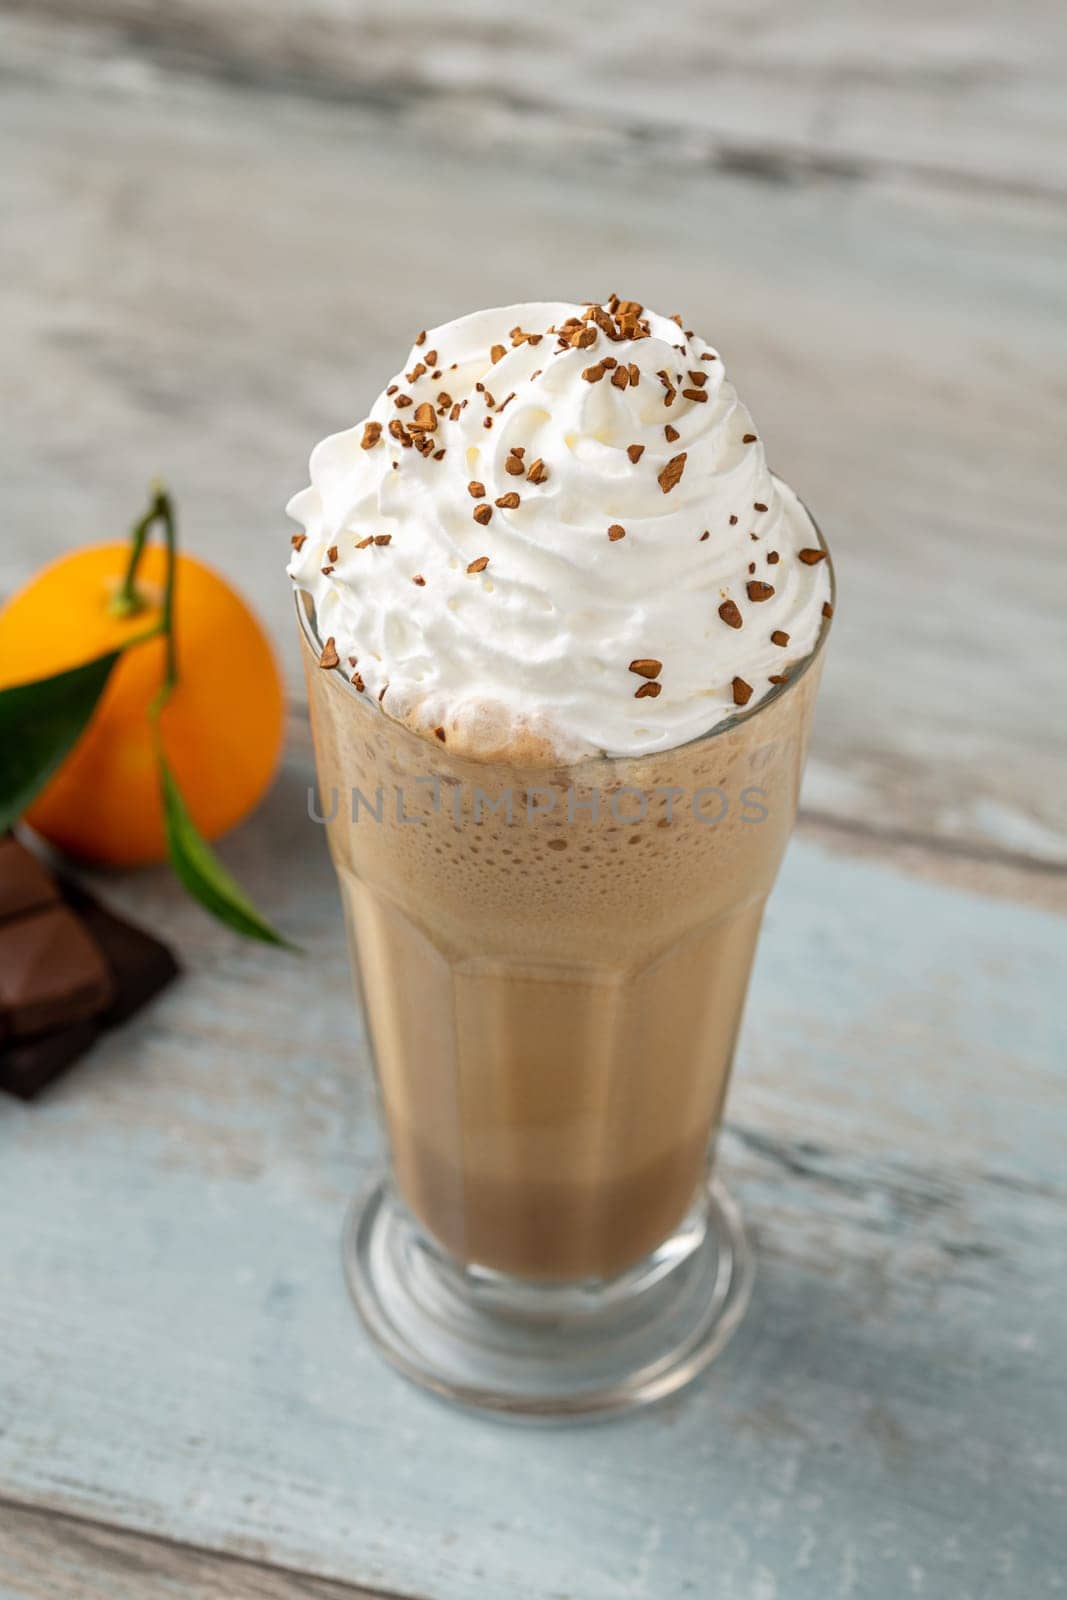 Orange and chocolate milkshake with coffee sprinkled on top by Sonat